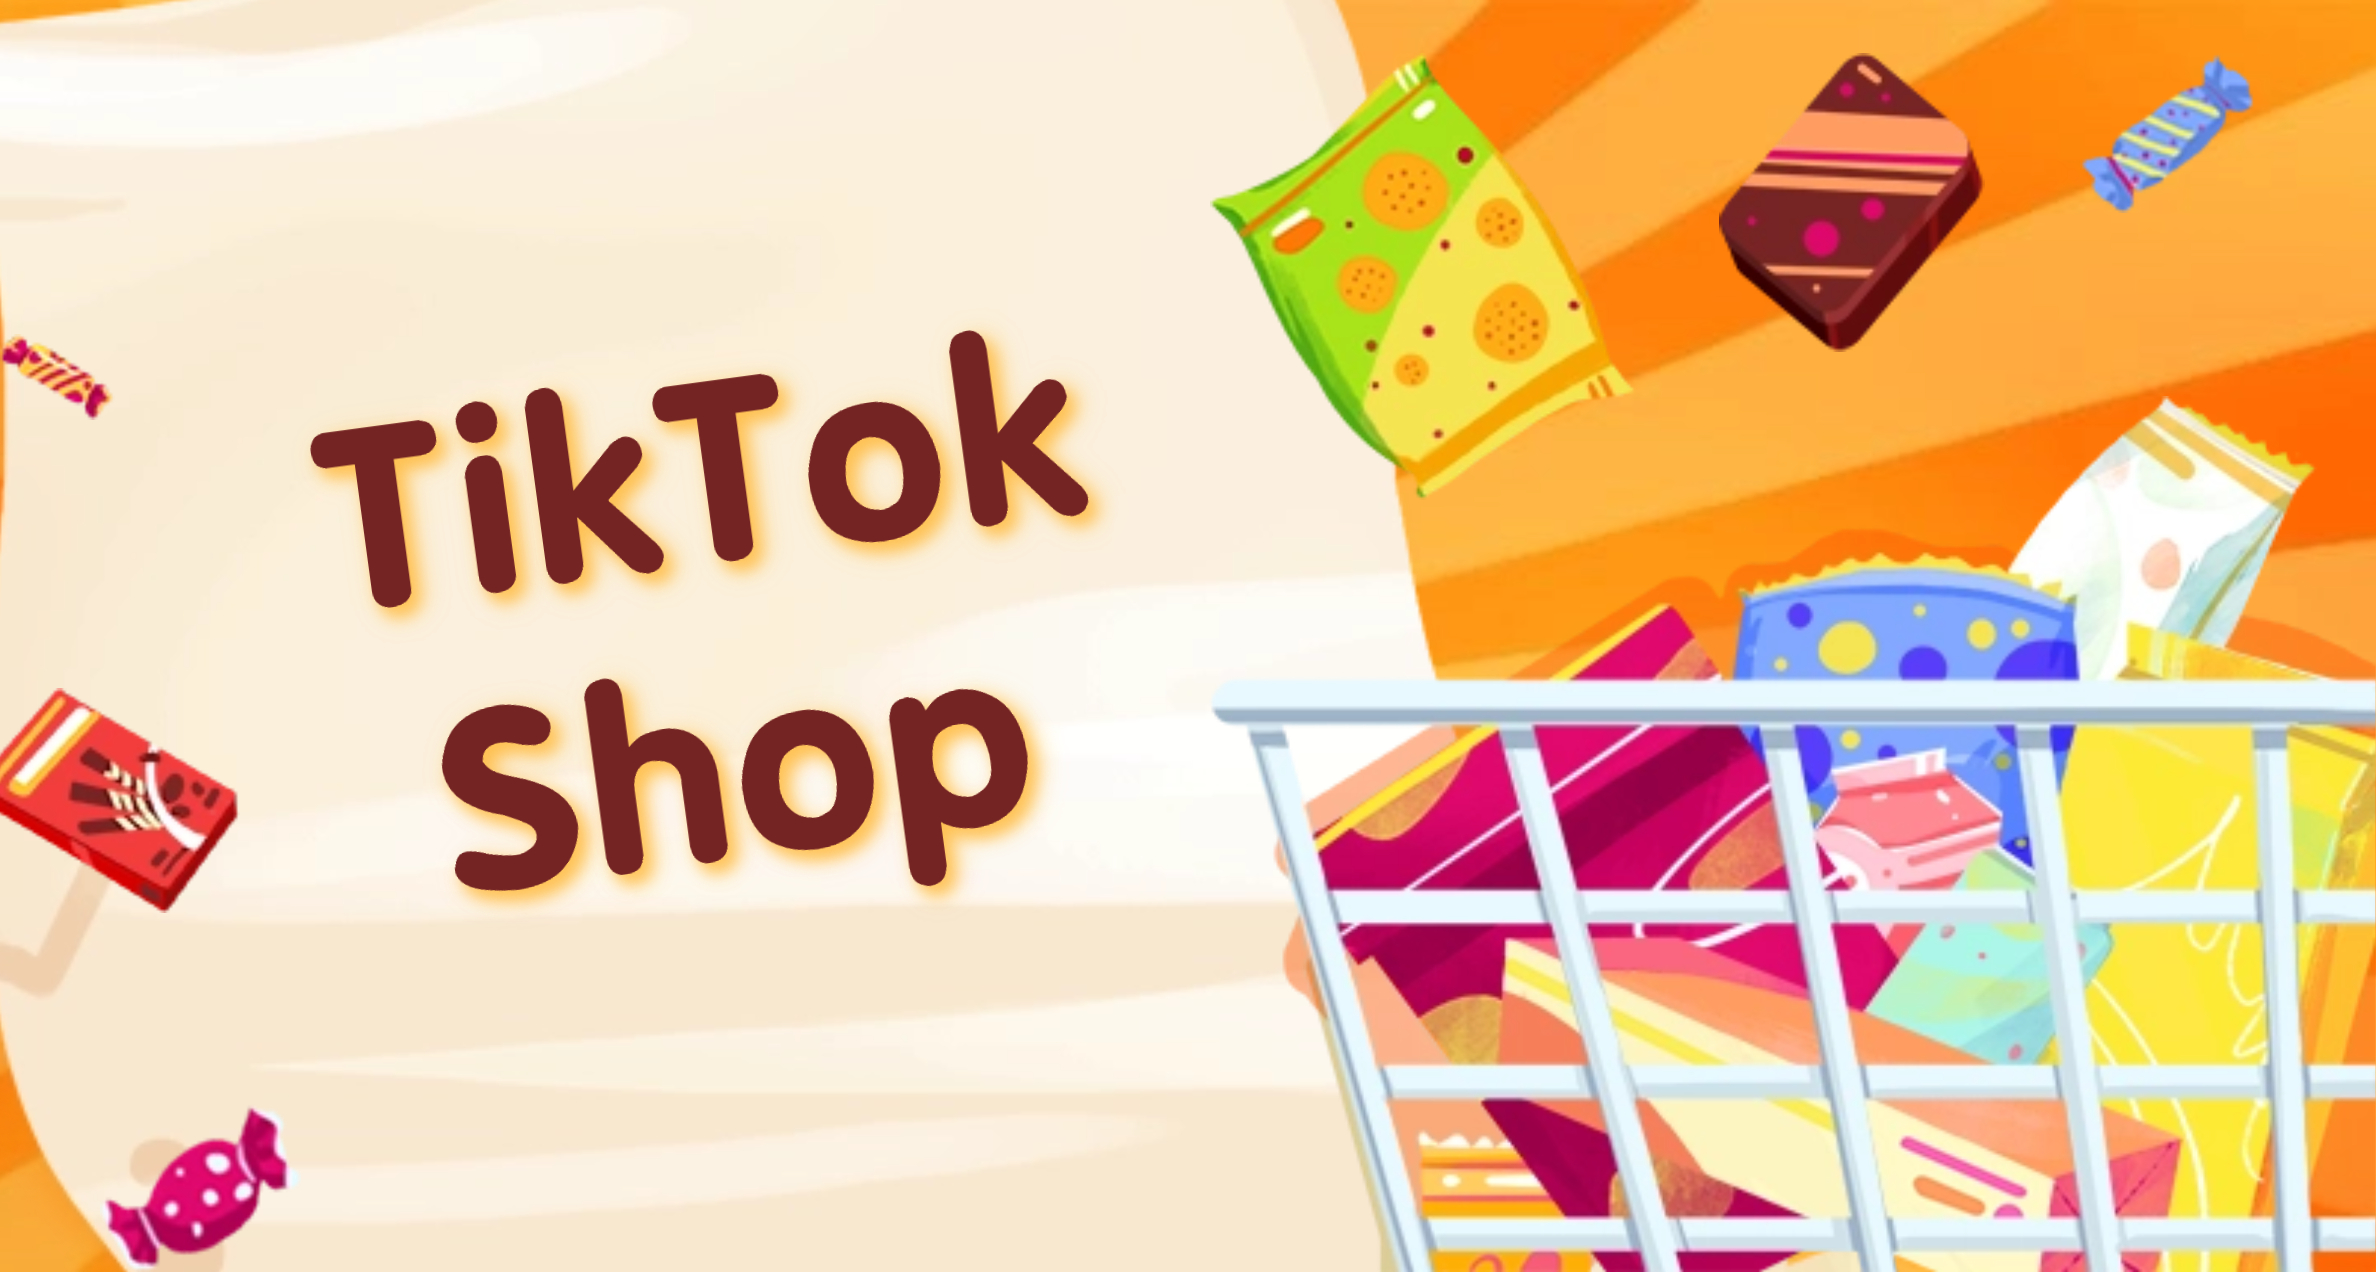 TikTok Shop印尼业务与Tokopedia将合并为PT Tokopedia